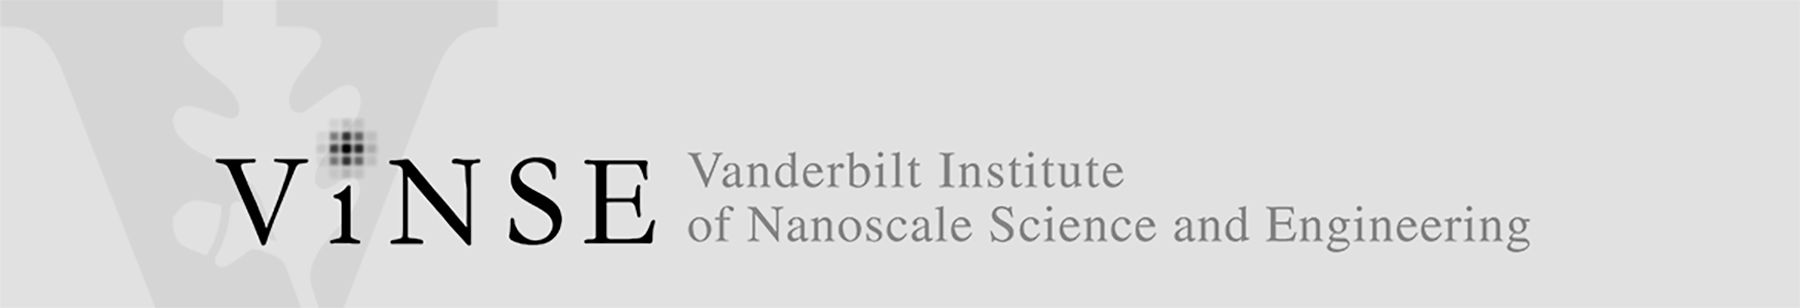 VINSE - Vanderbilt Institute of Nanoscale Science and Engineering